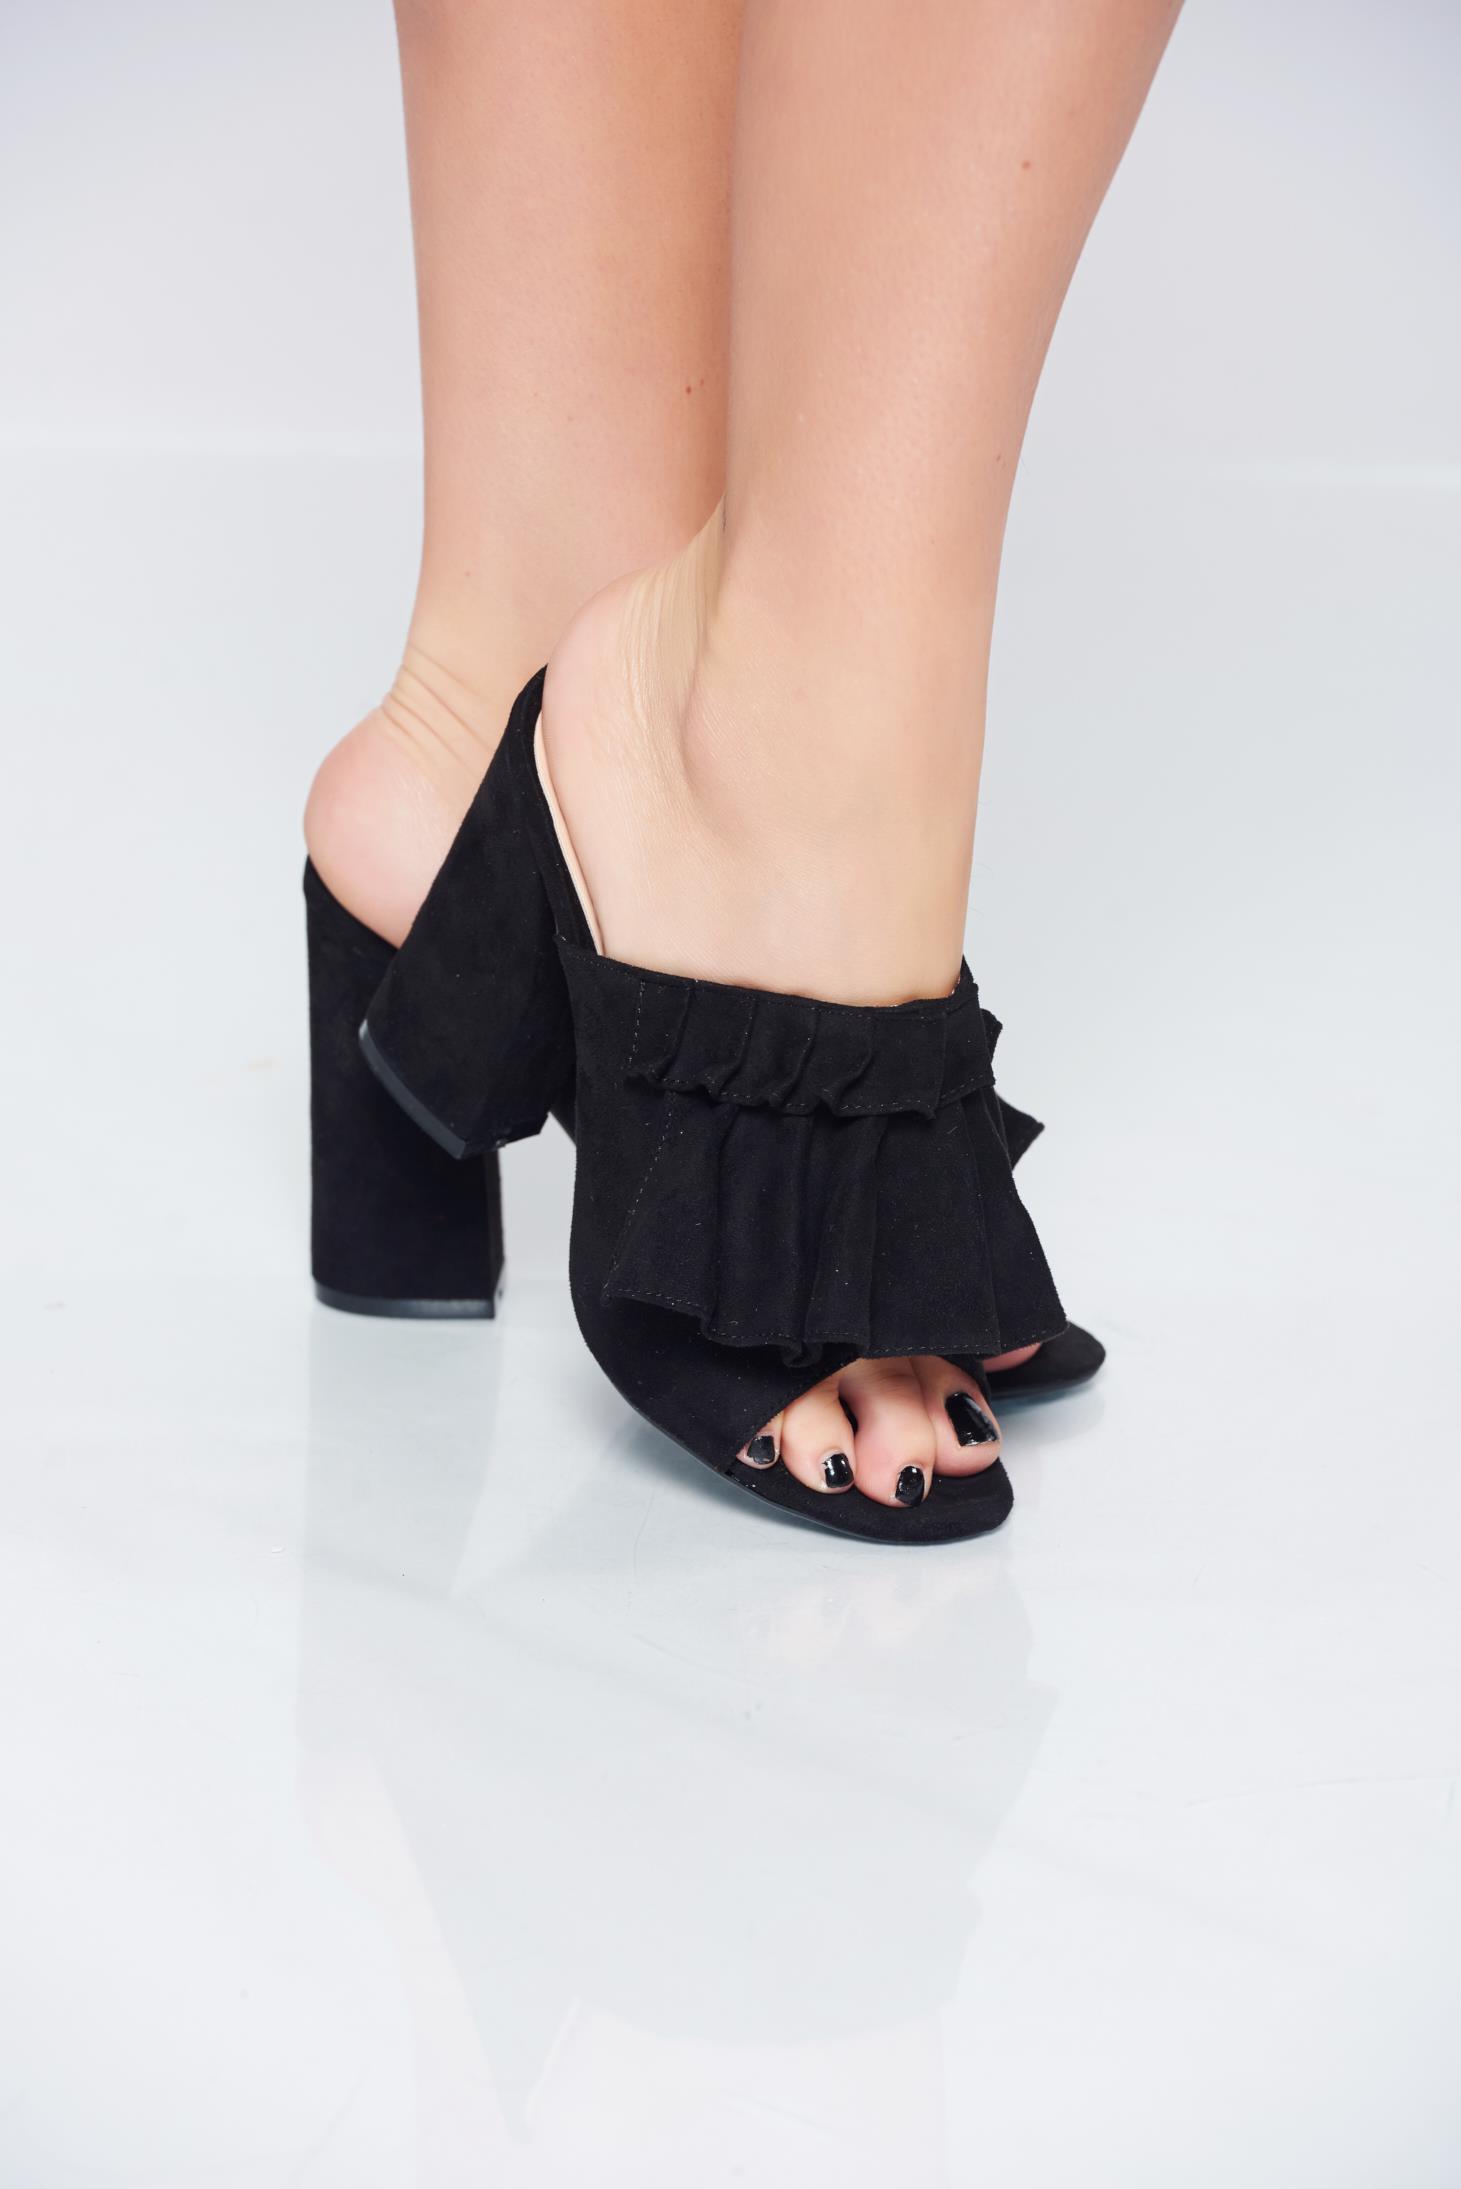 square black heels